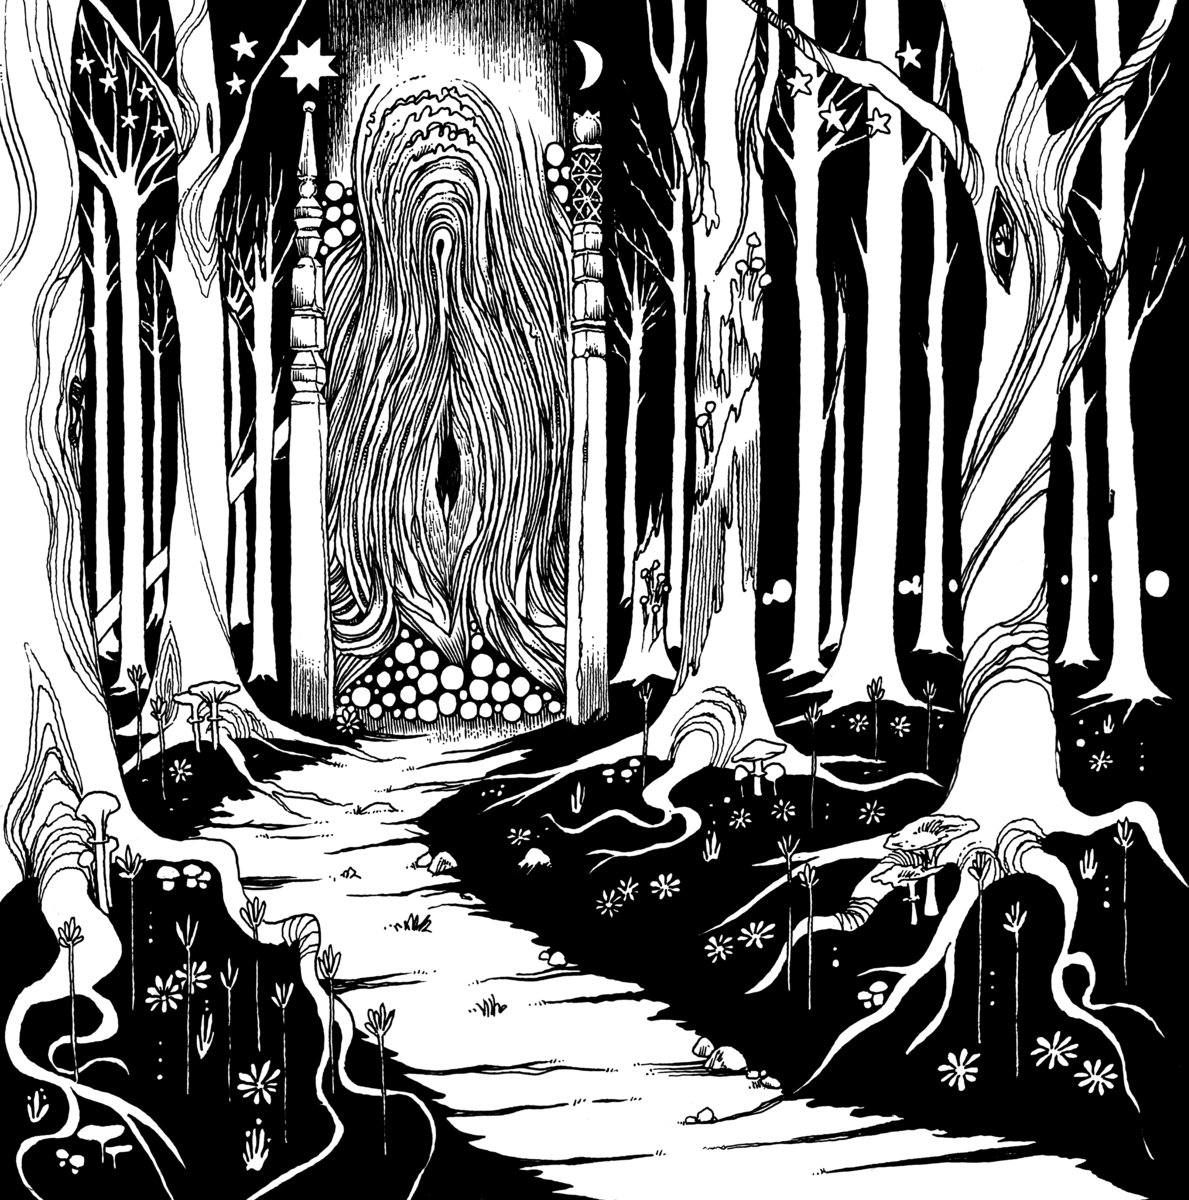 Siculicidium – Land Beyond The Forest